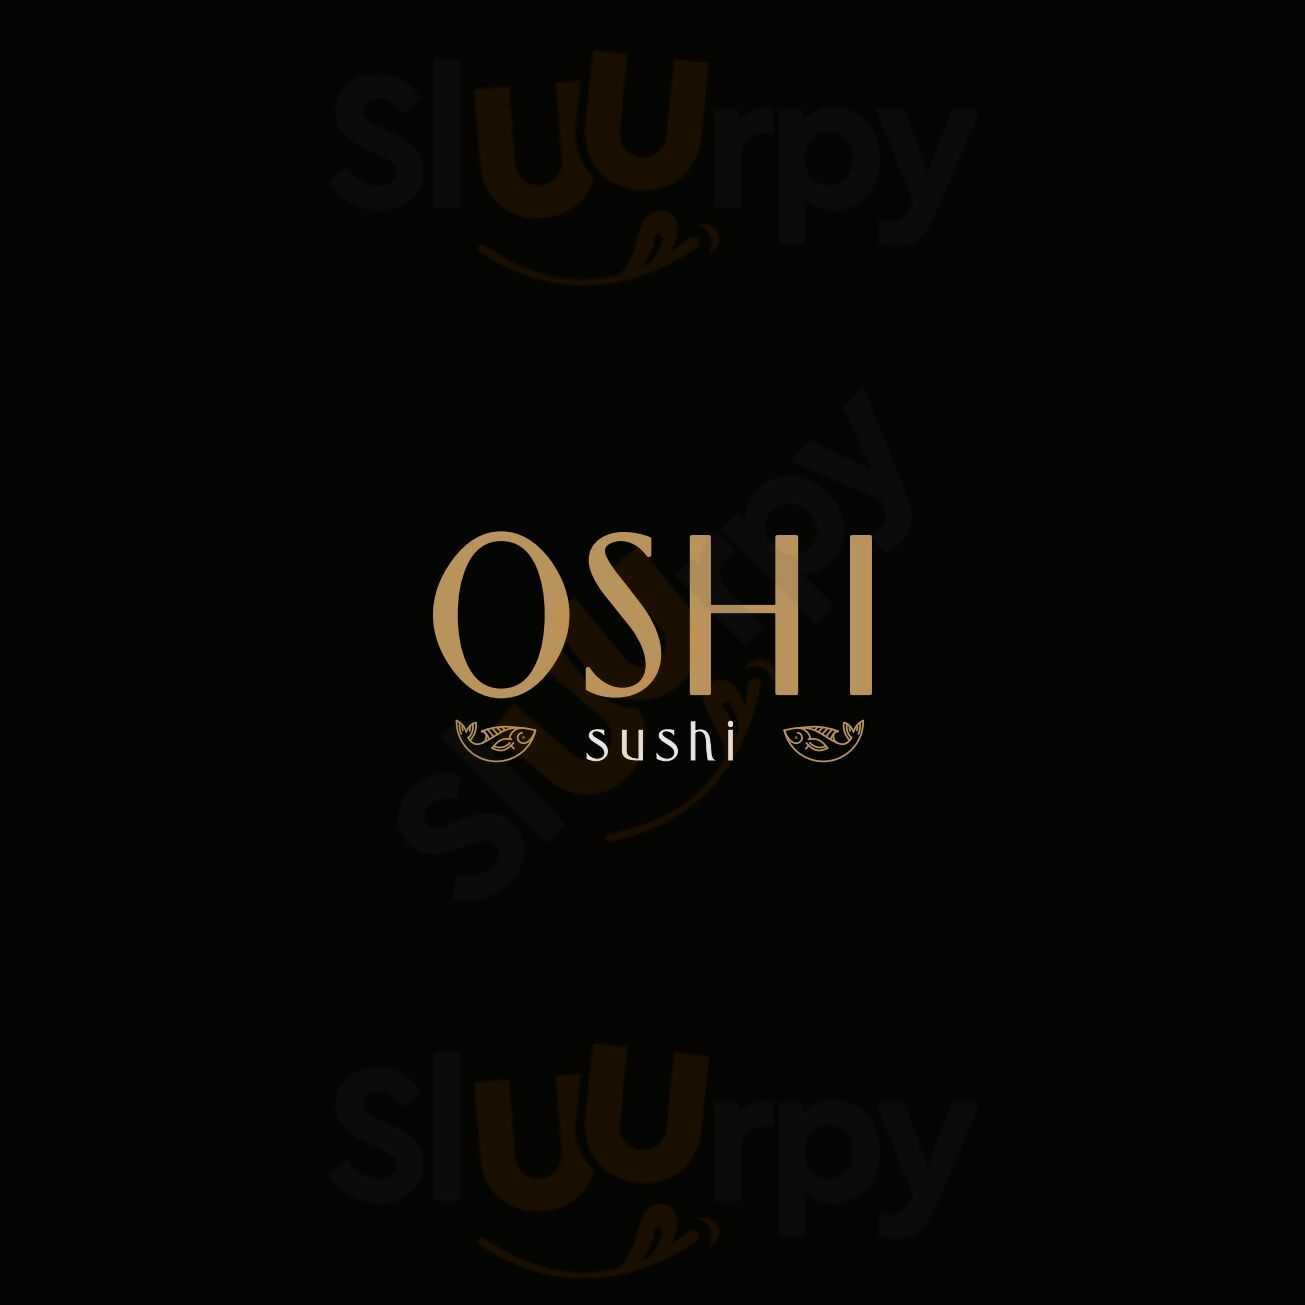 Oshi Sushi Lisboa Menu - 1